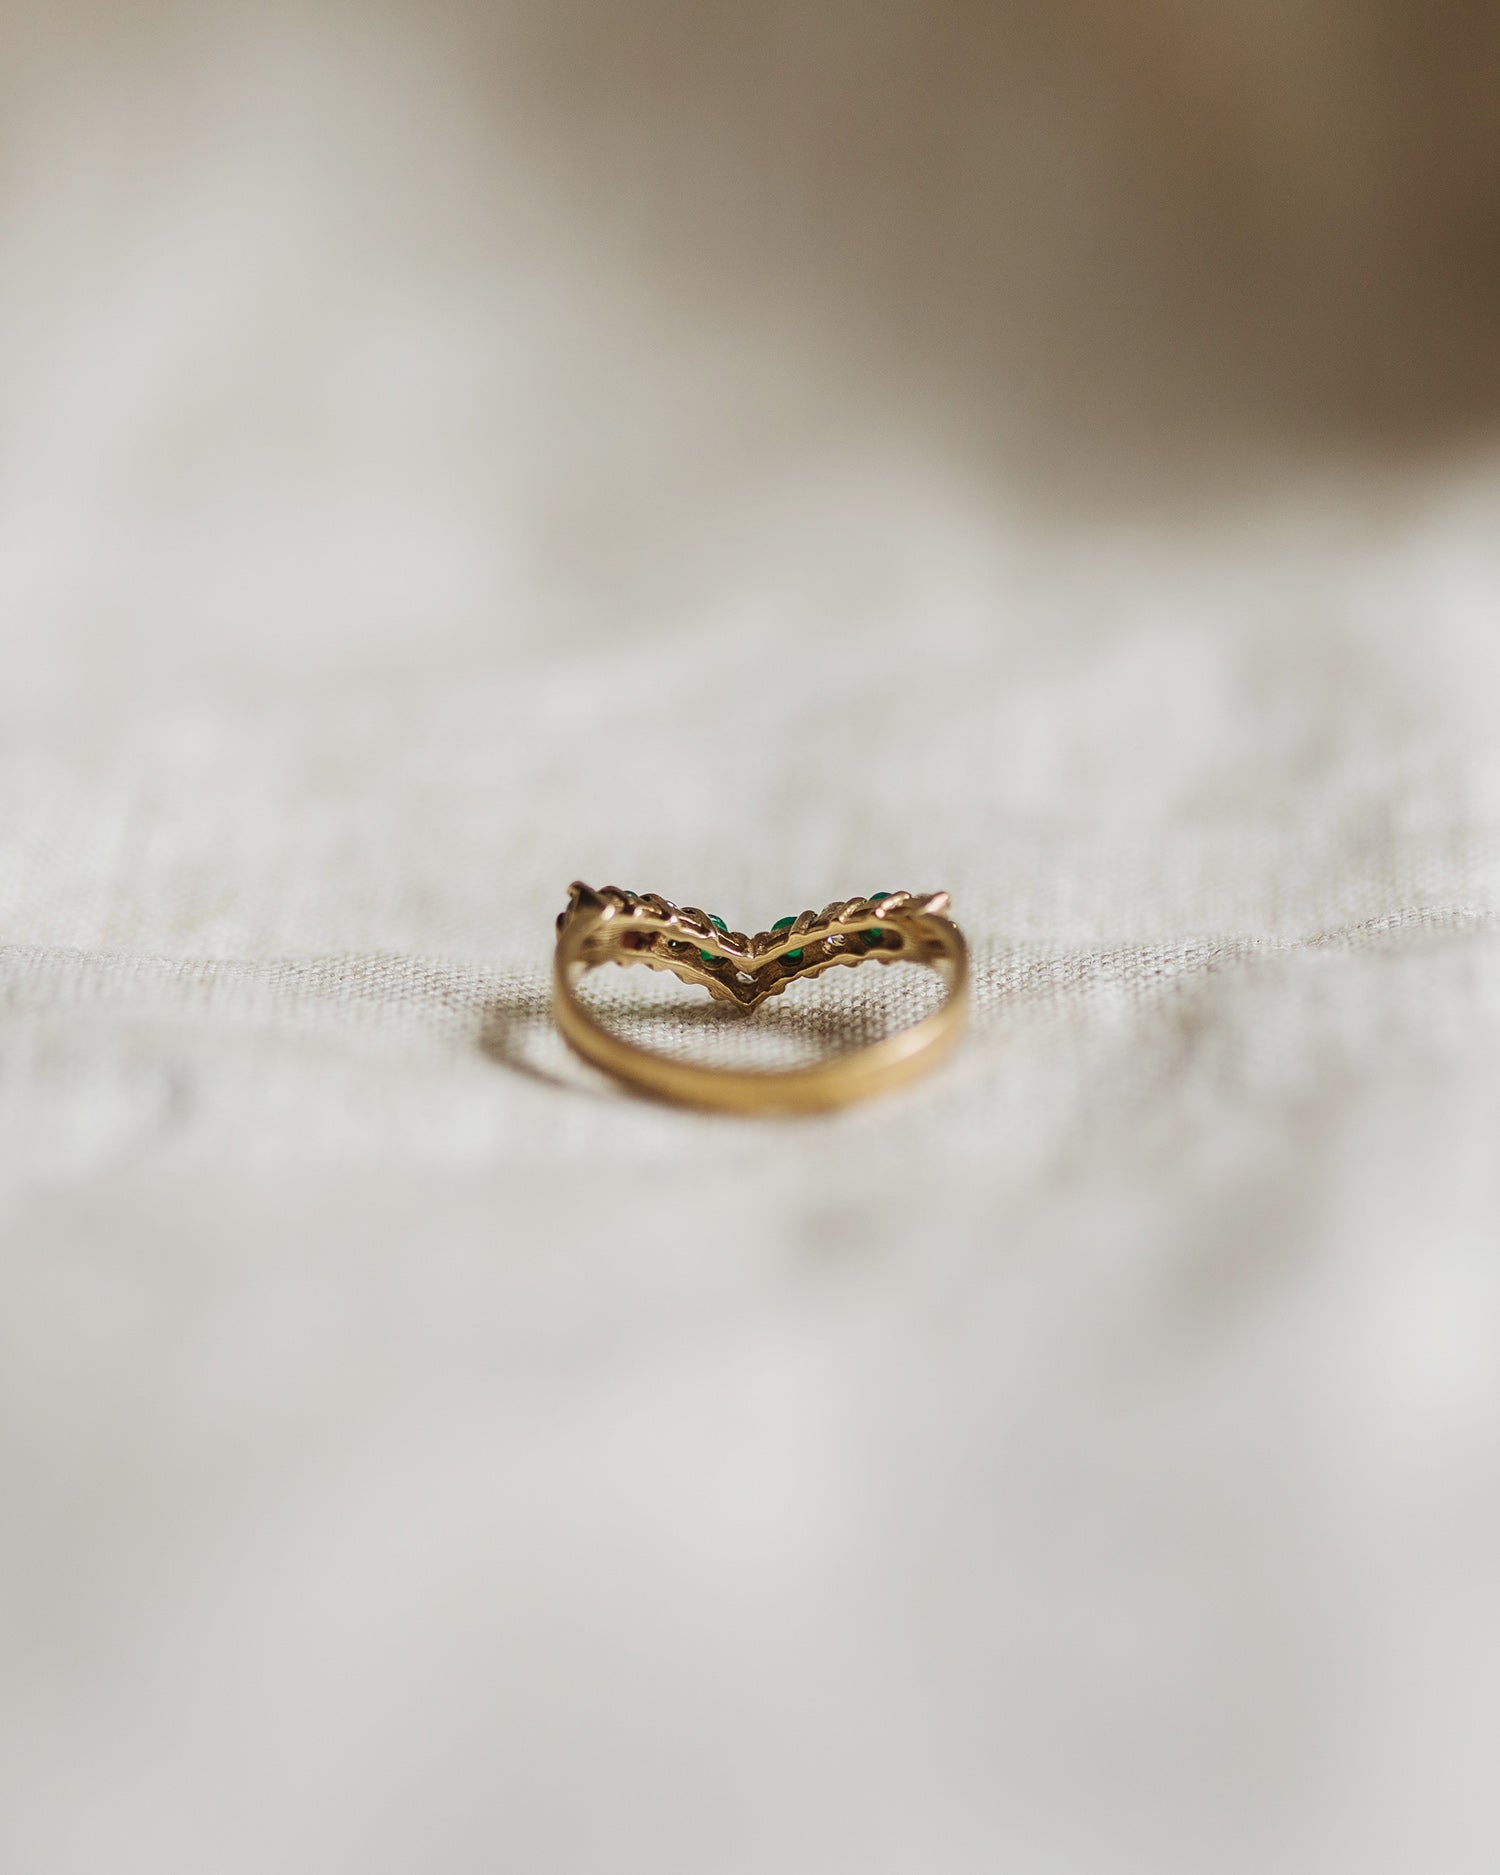 Joyce 9ct Gold Emerald Ring